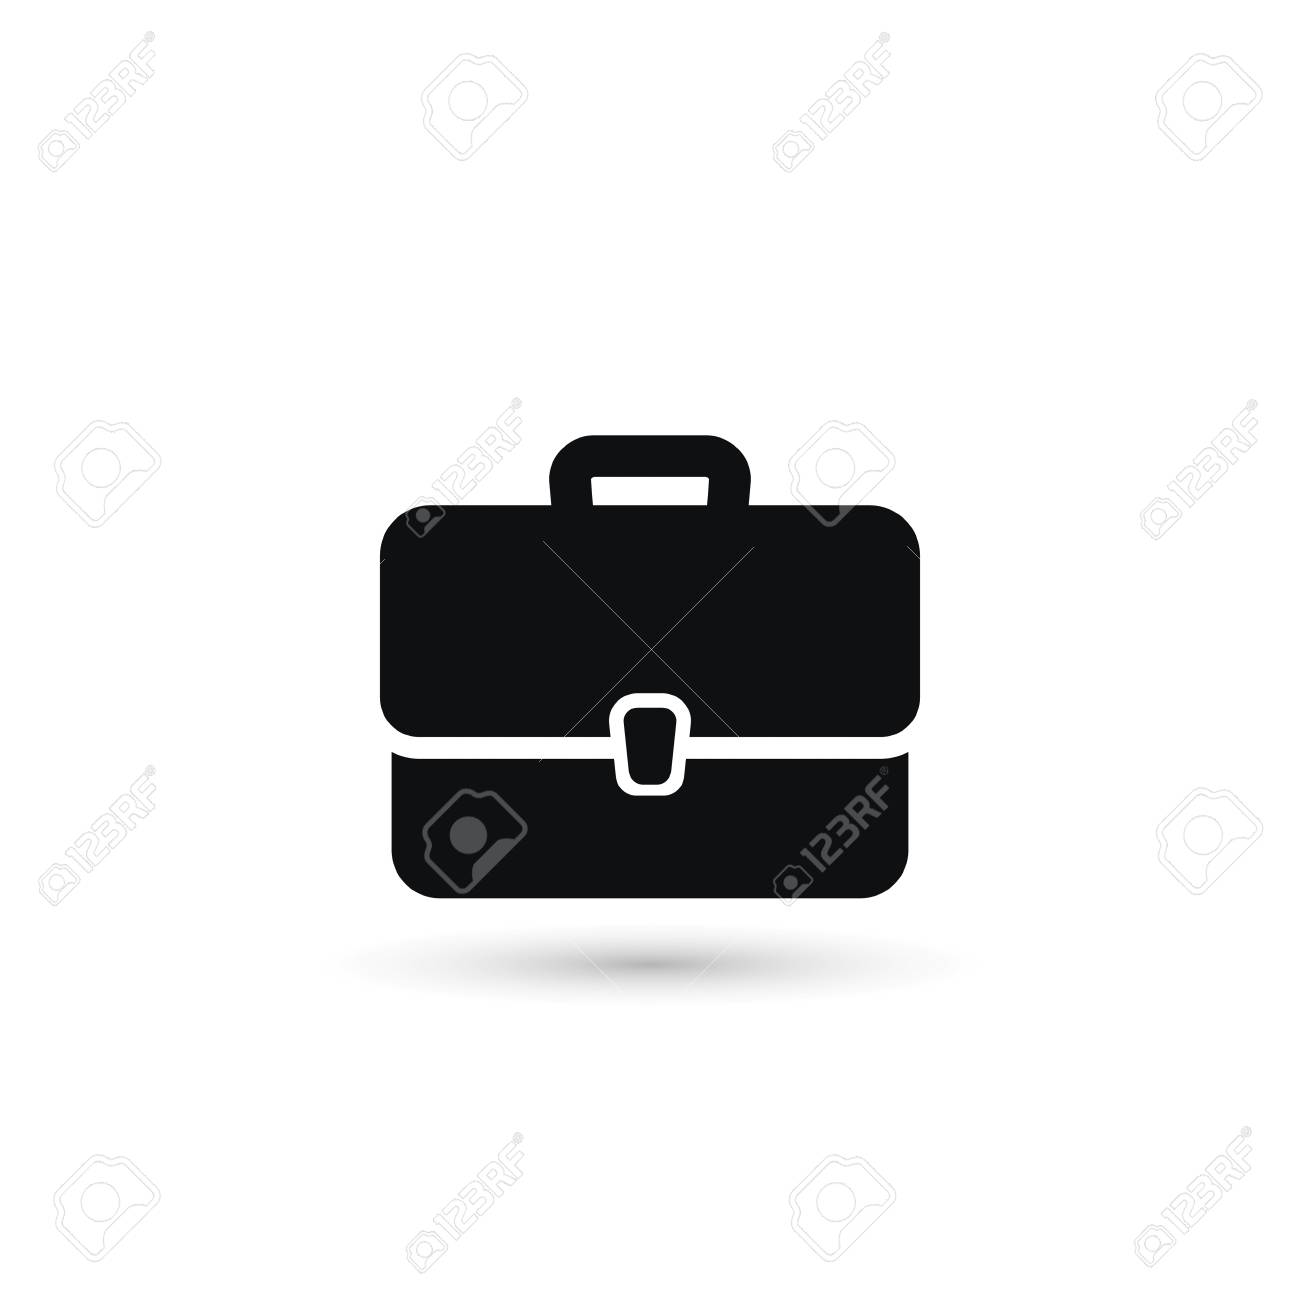 Qué significa una maleta tachada